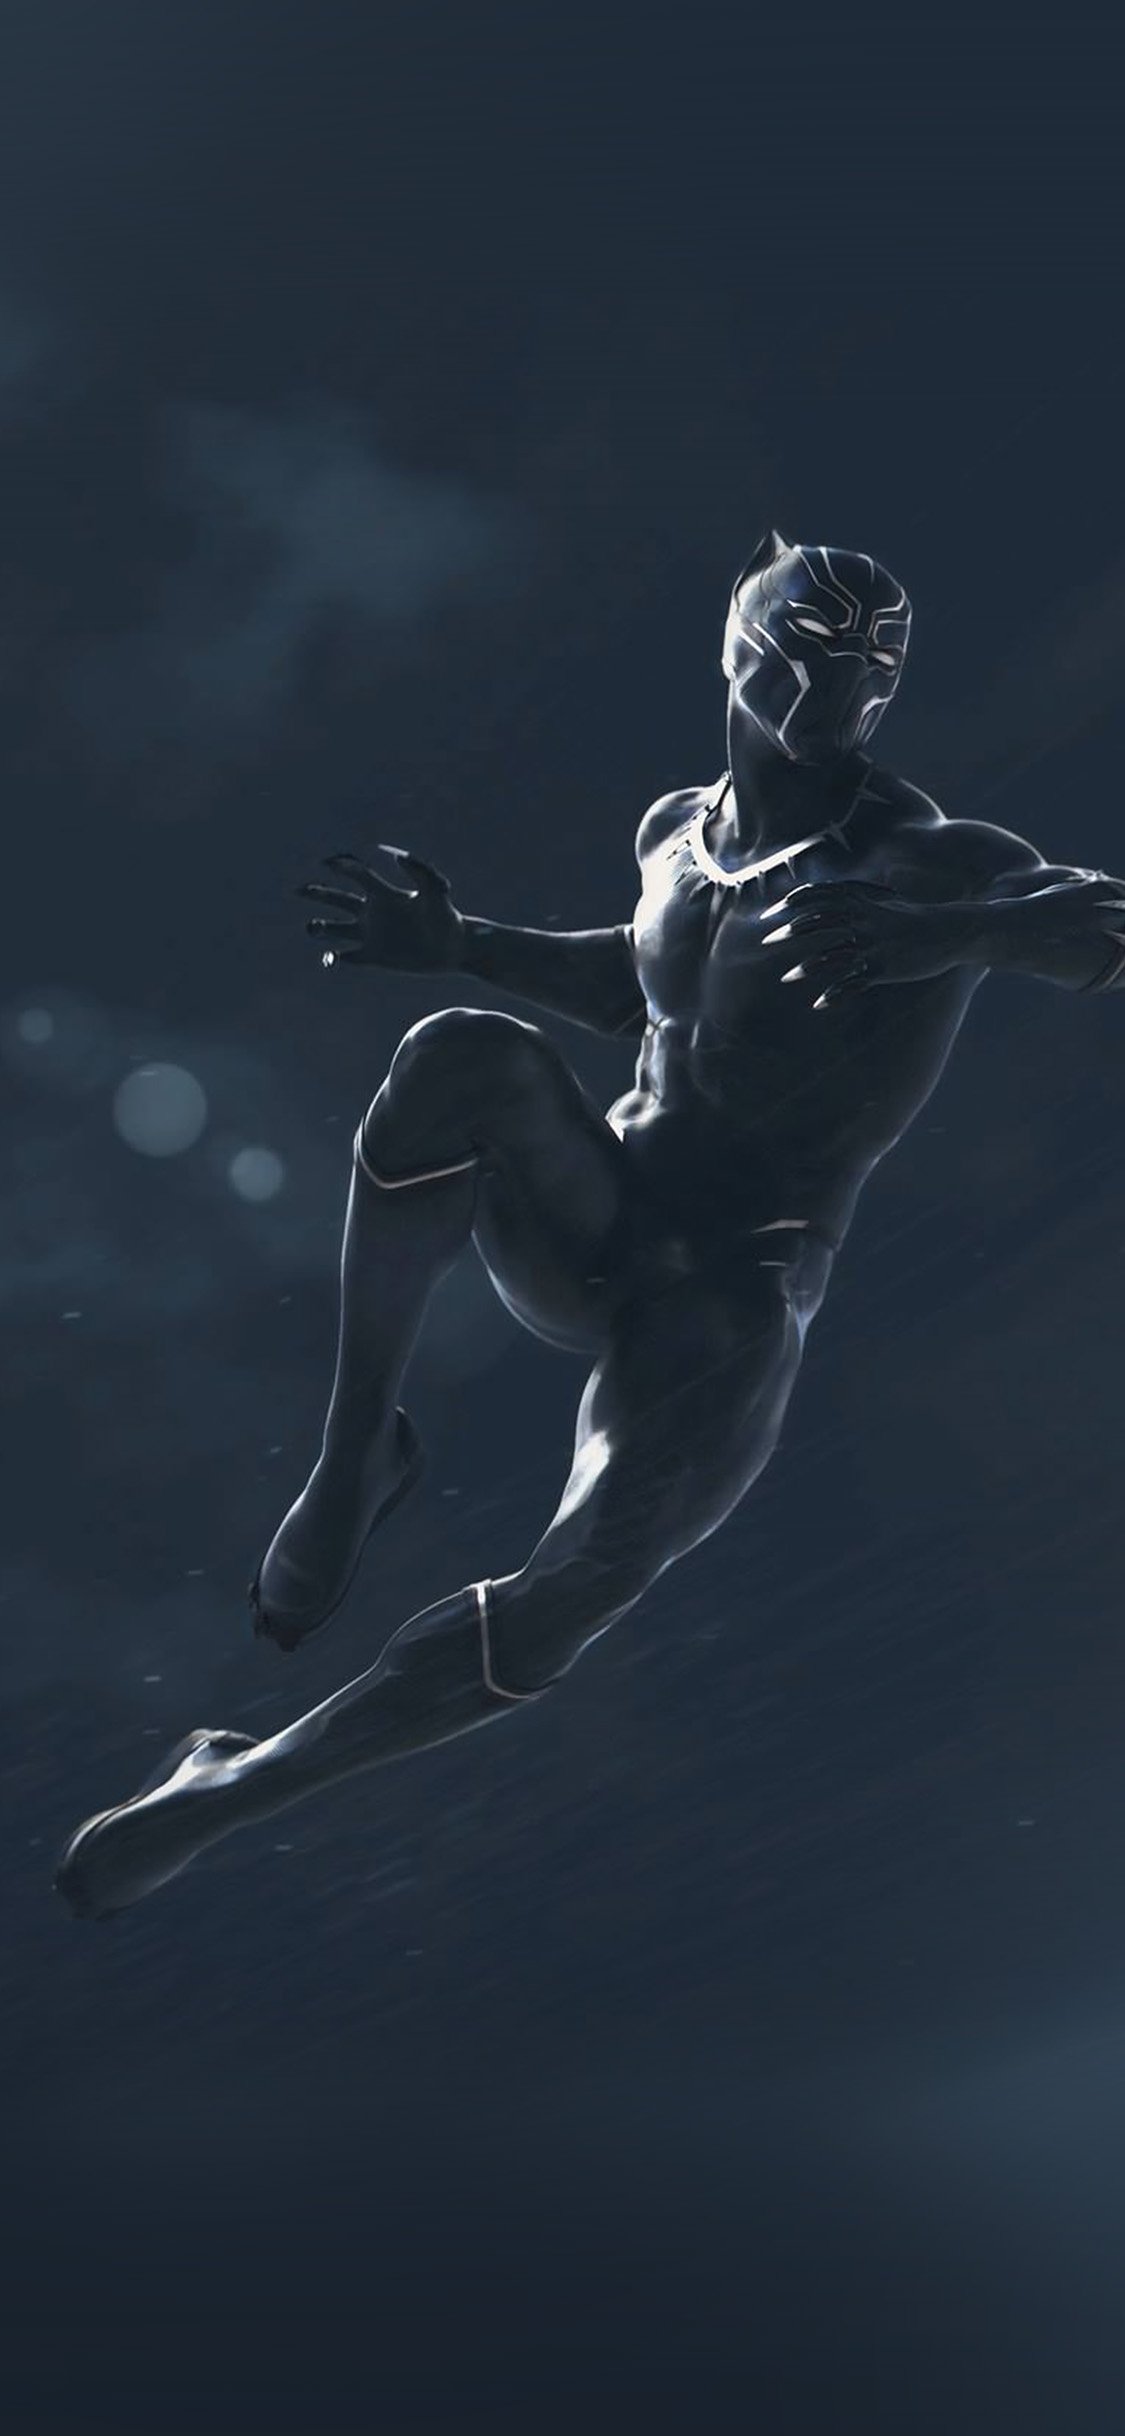 Marvel Black Panther Dark Art Illustration Iphone X Wallpapers Free Download